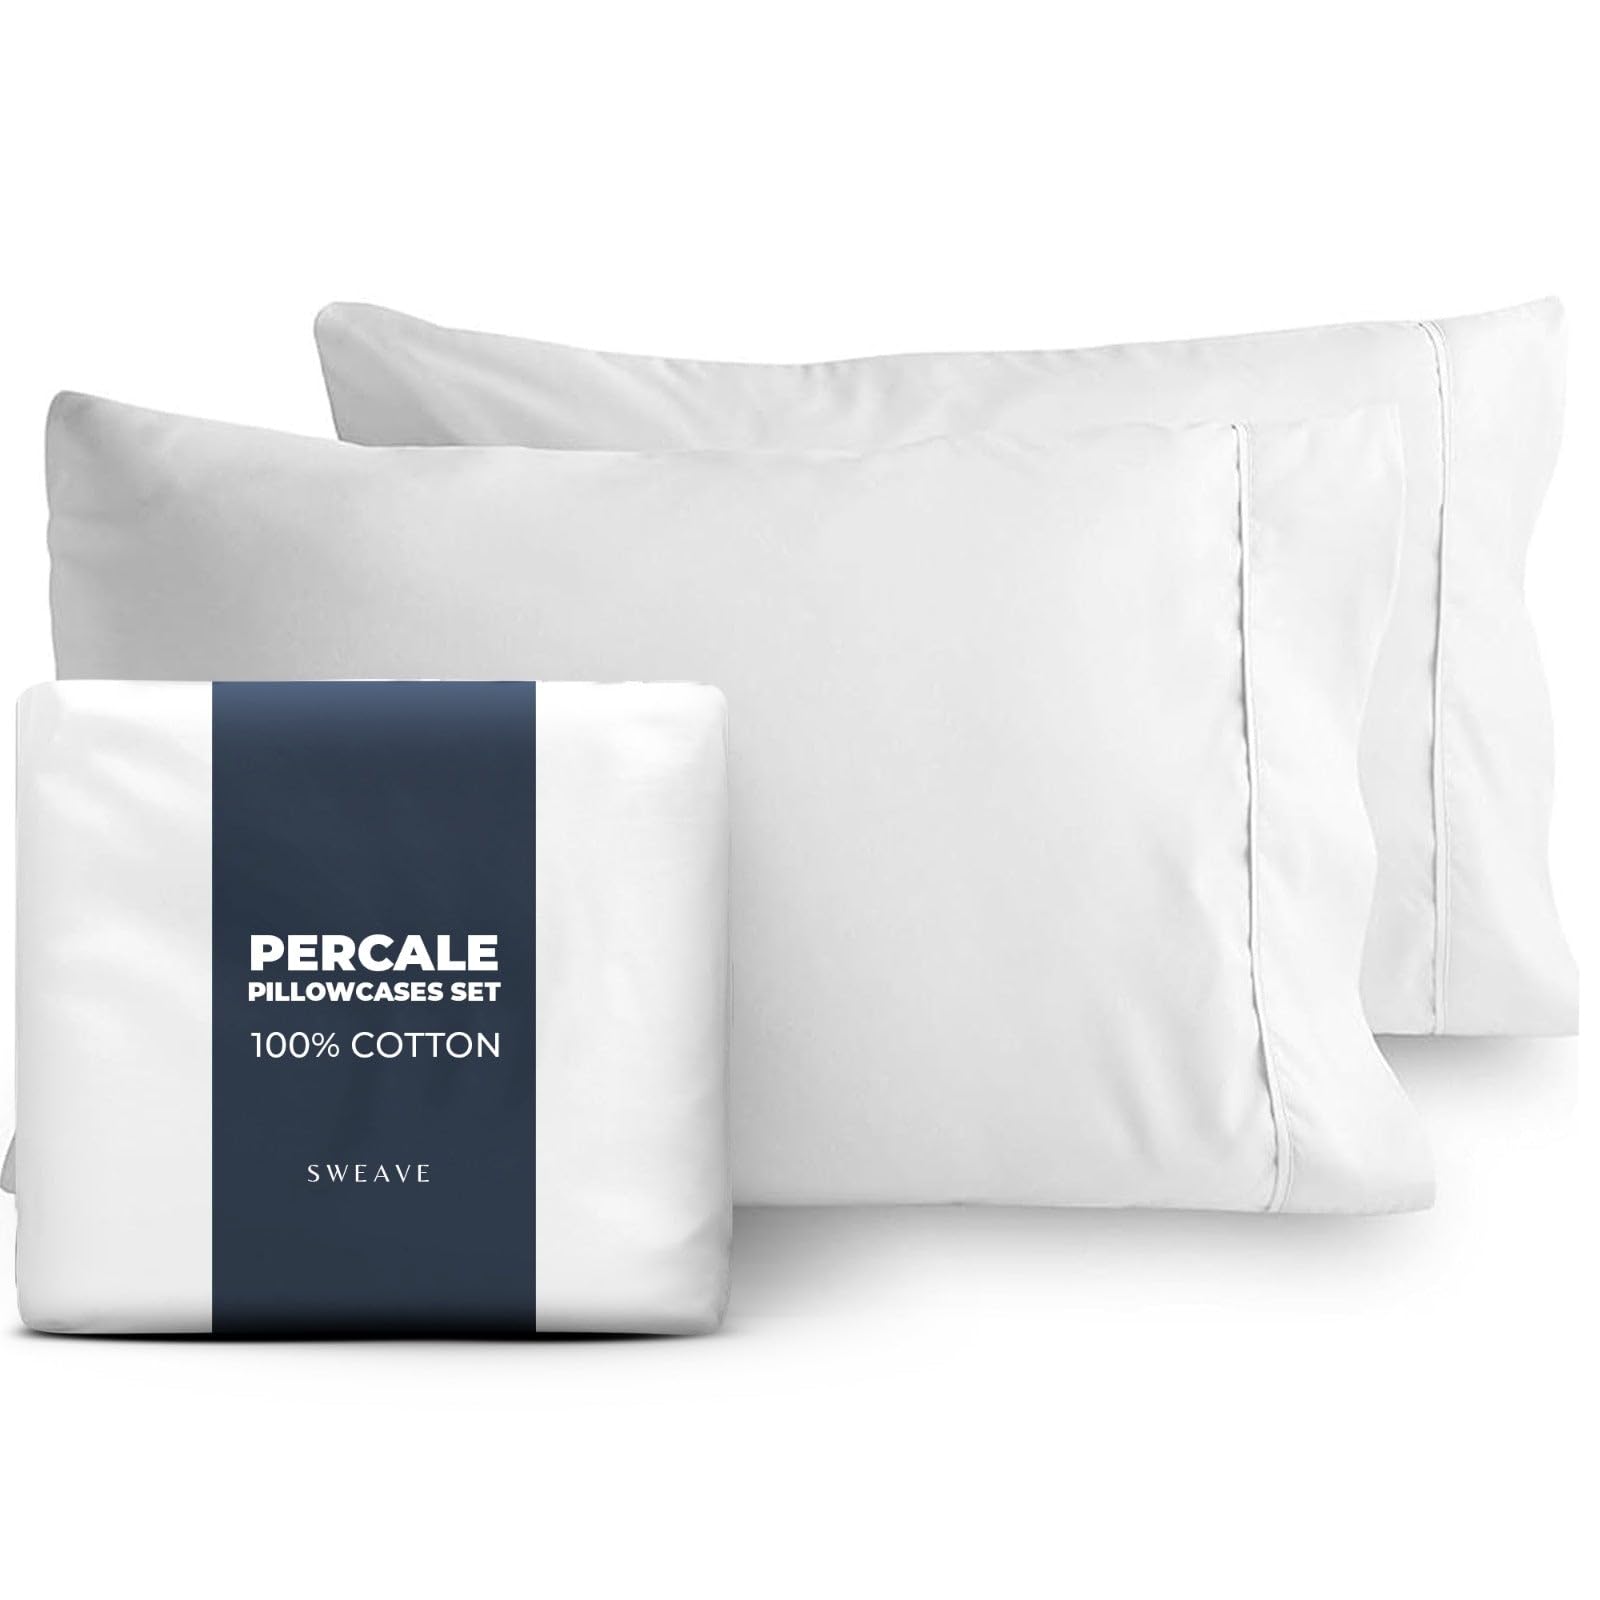 100% Cotton Percale Pillowcases